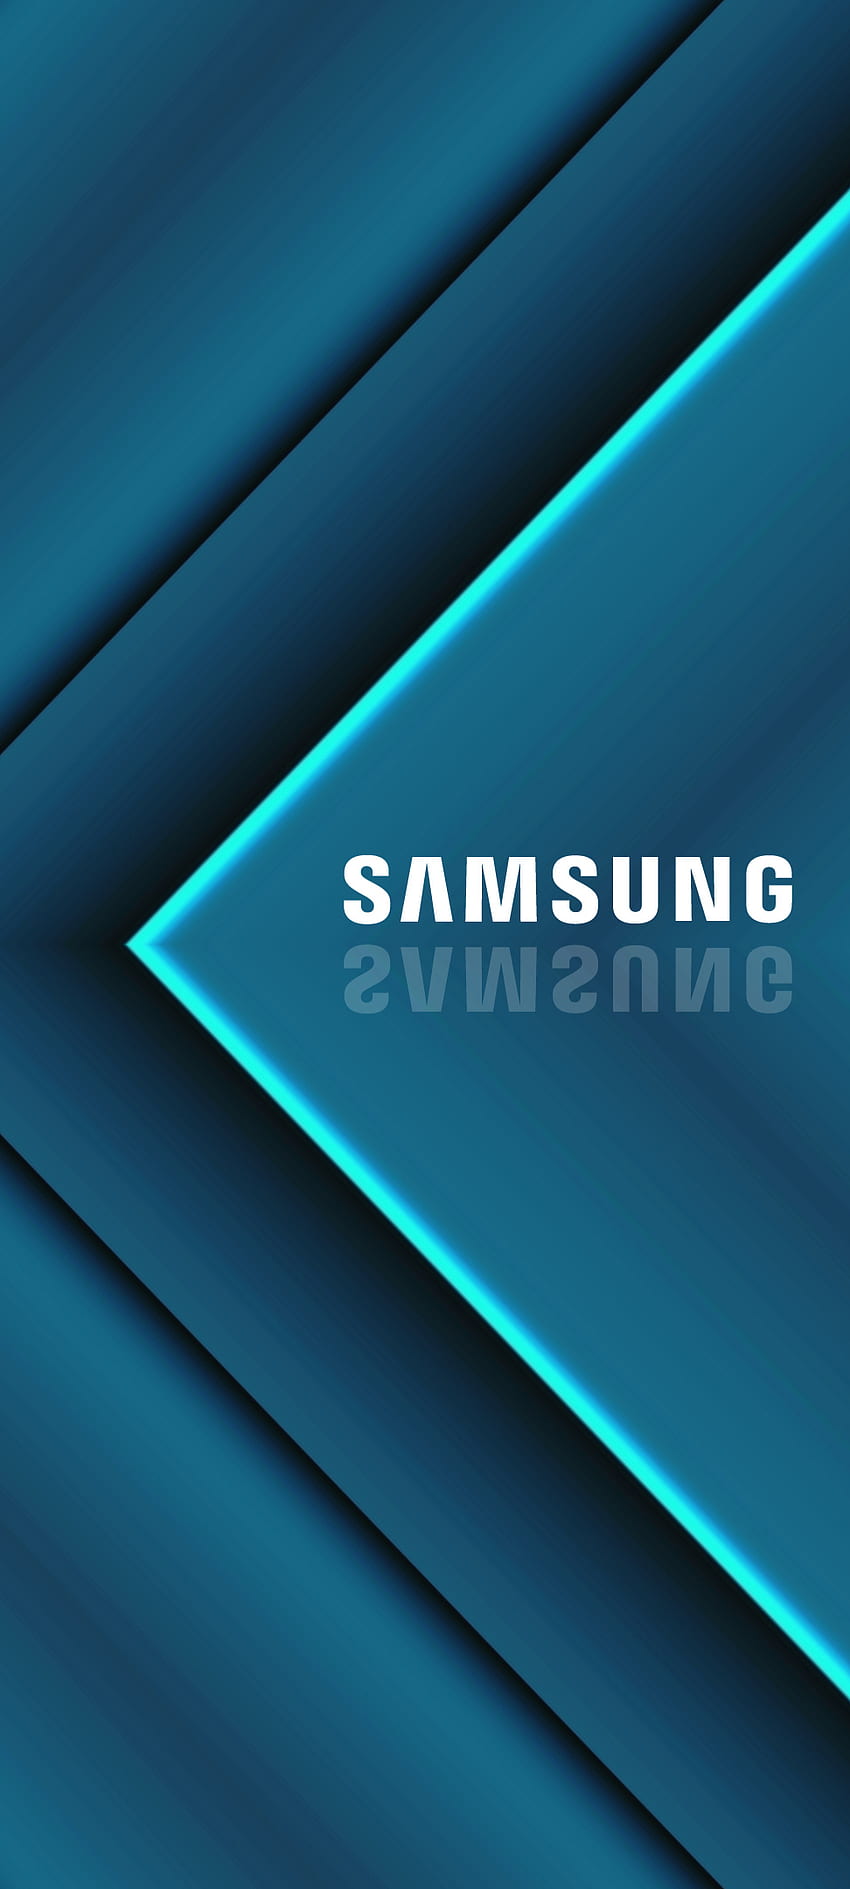 Logotipo del teléfono Samsung fondo de pantalla del teléfono